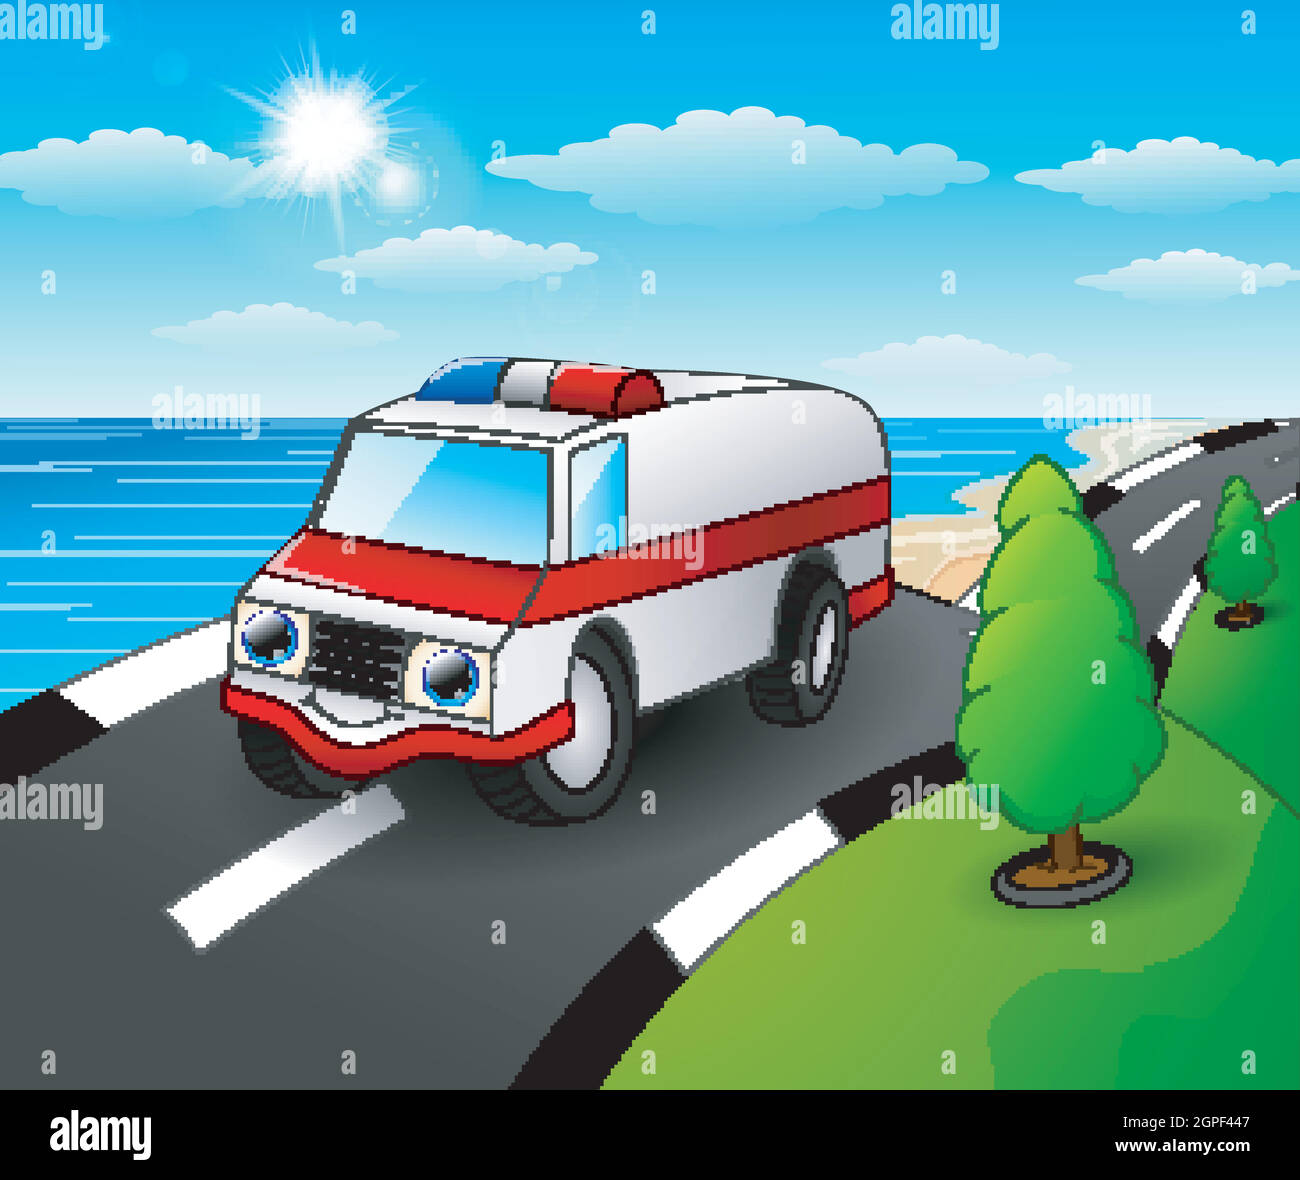 Ambulance car cartoon in the seaside road Stock Vector